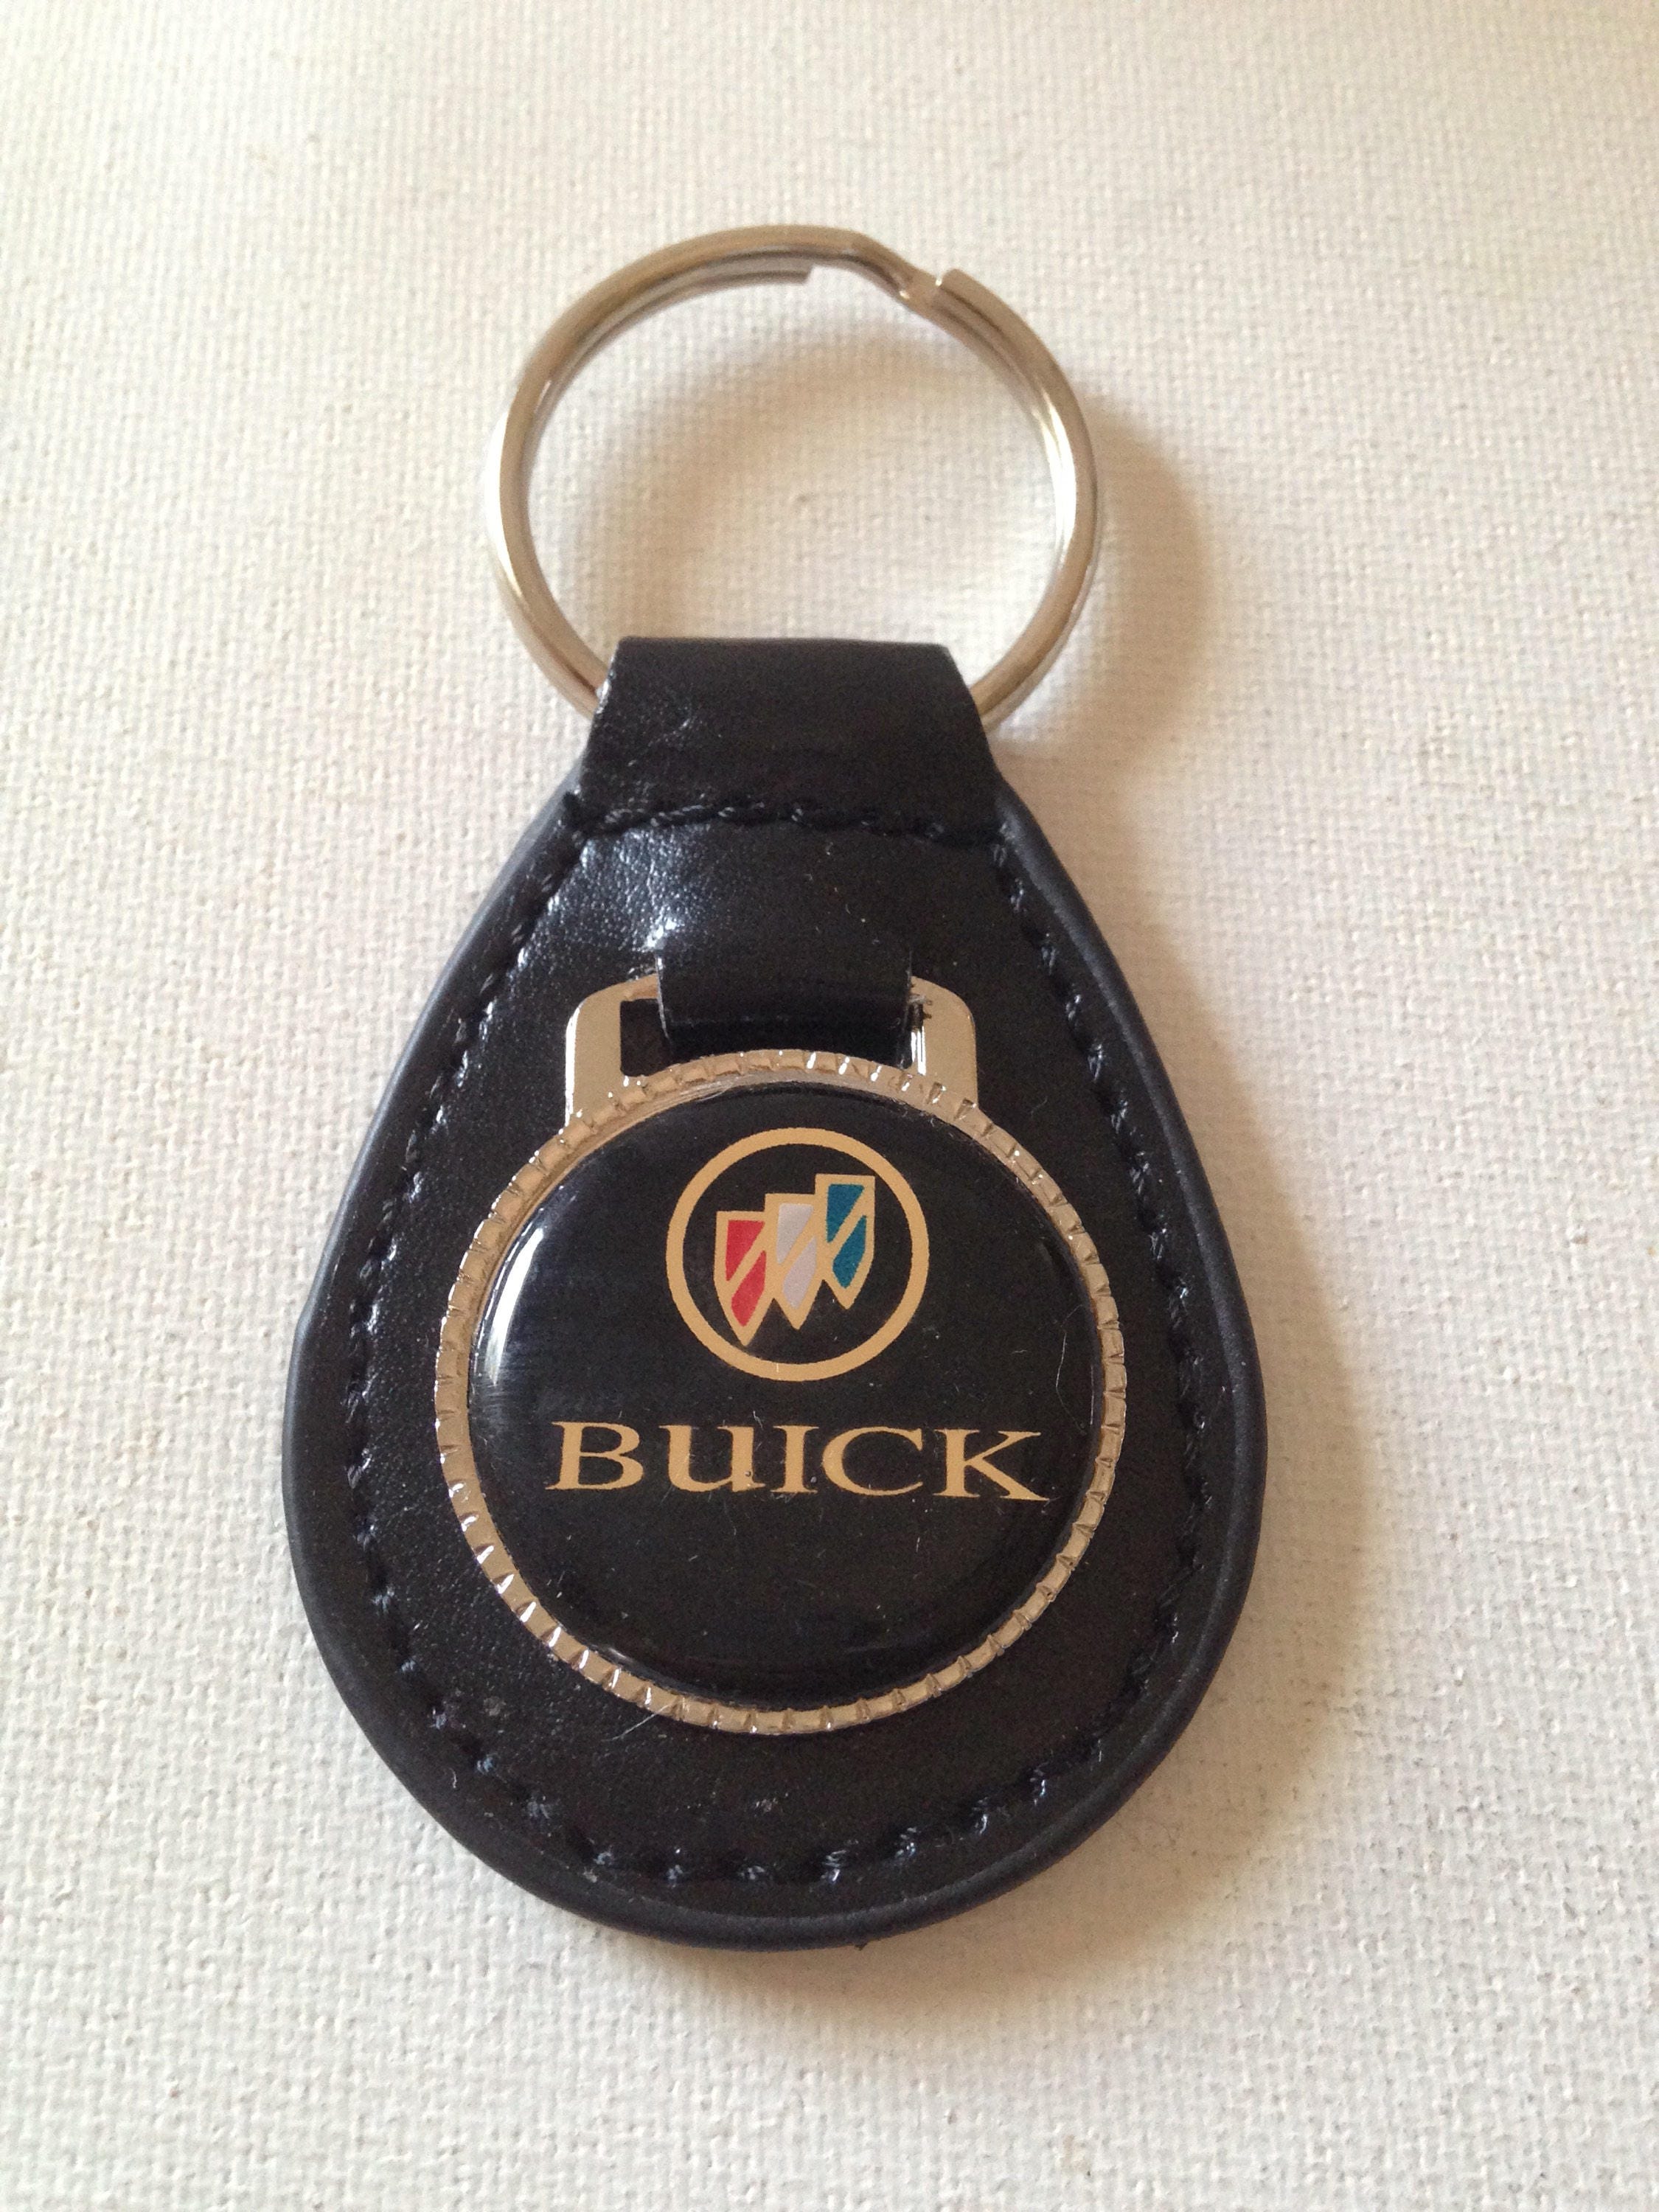 Buick Keychain Black Leather Key Chain